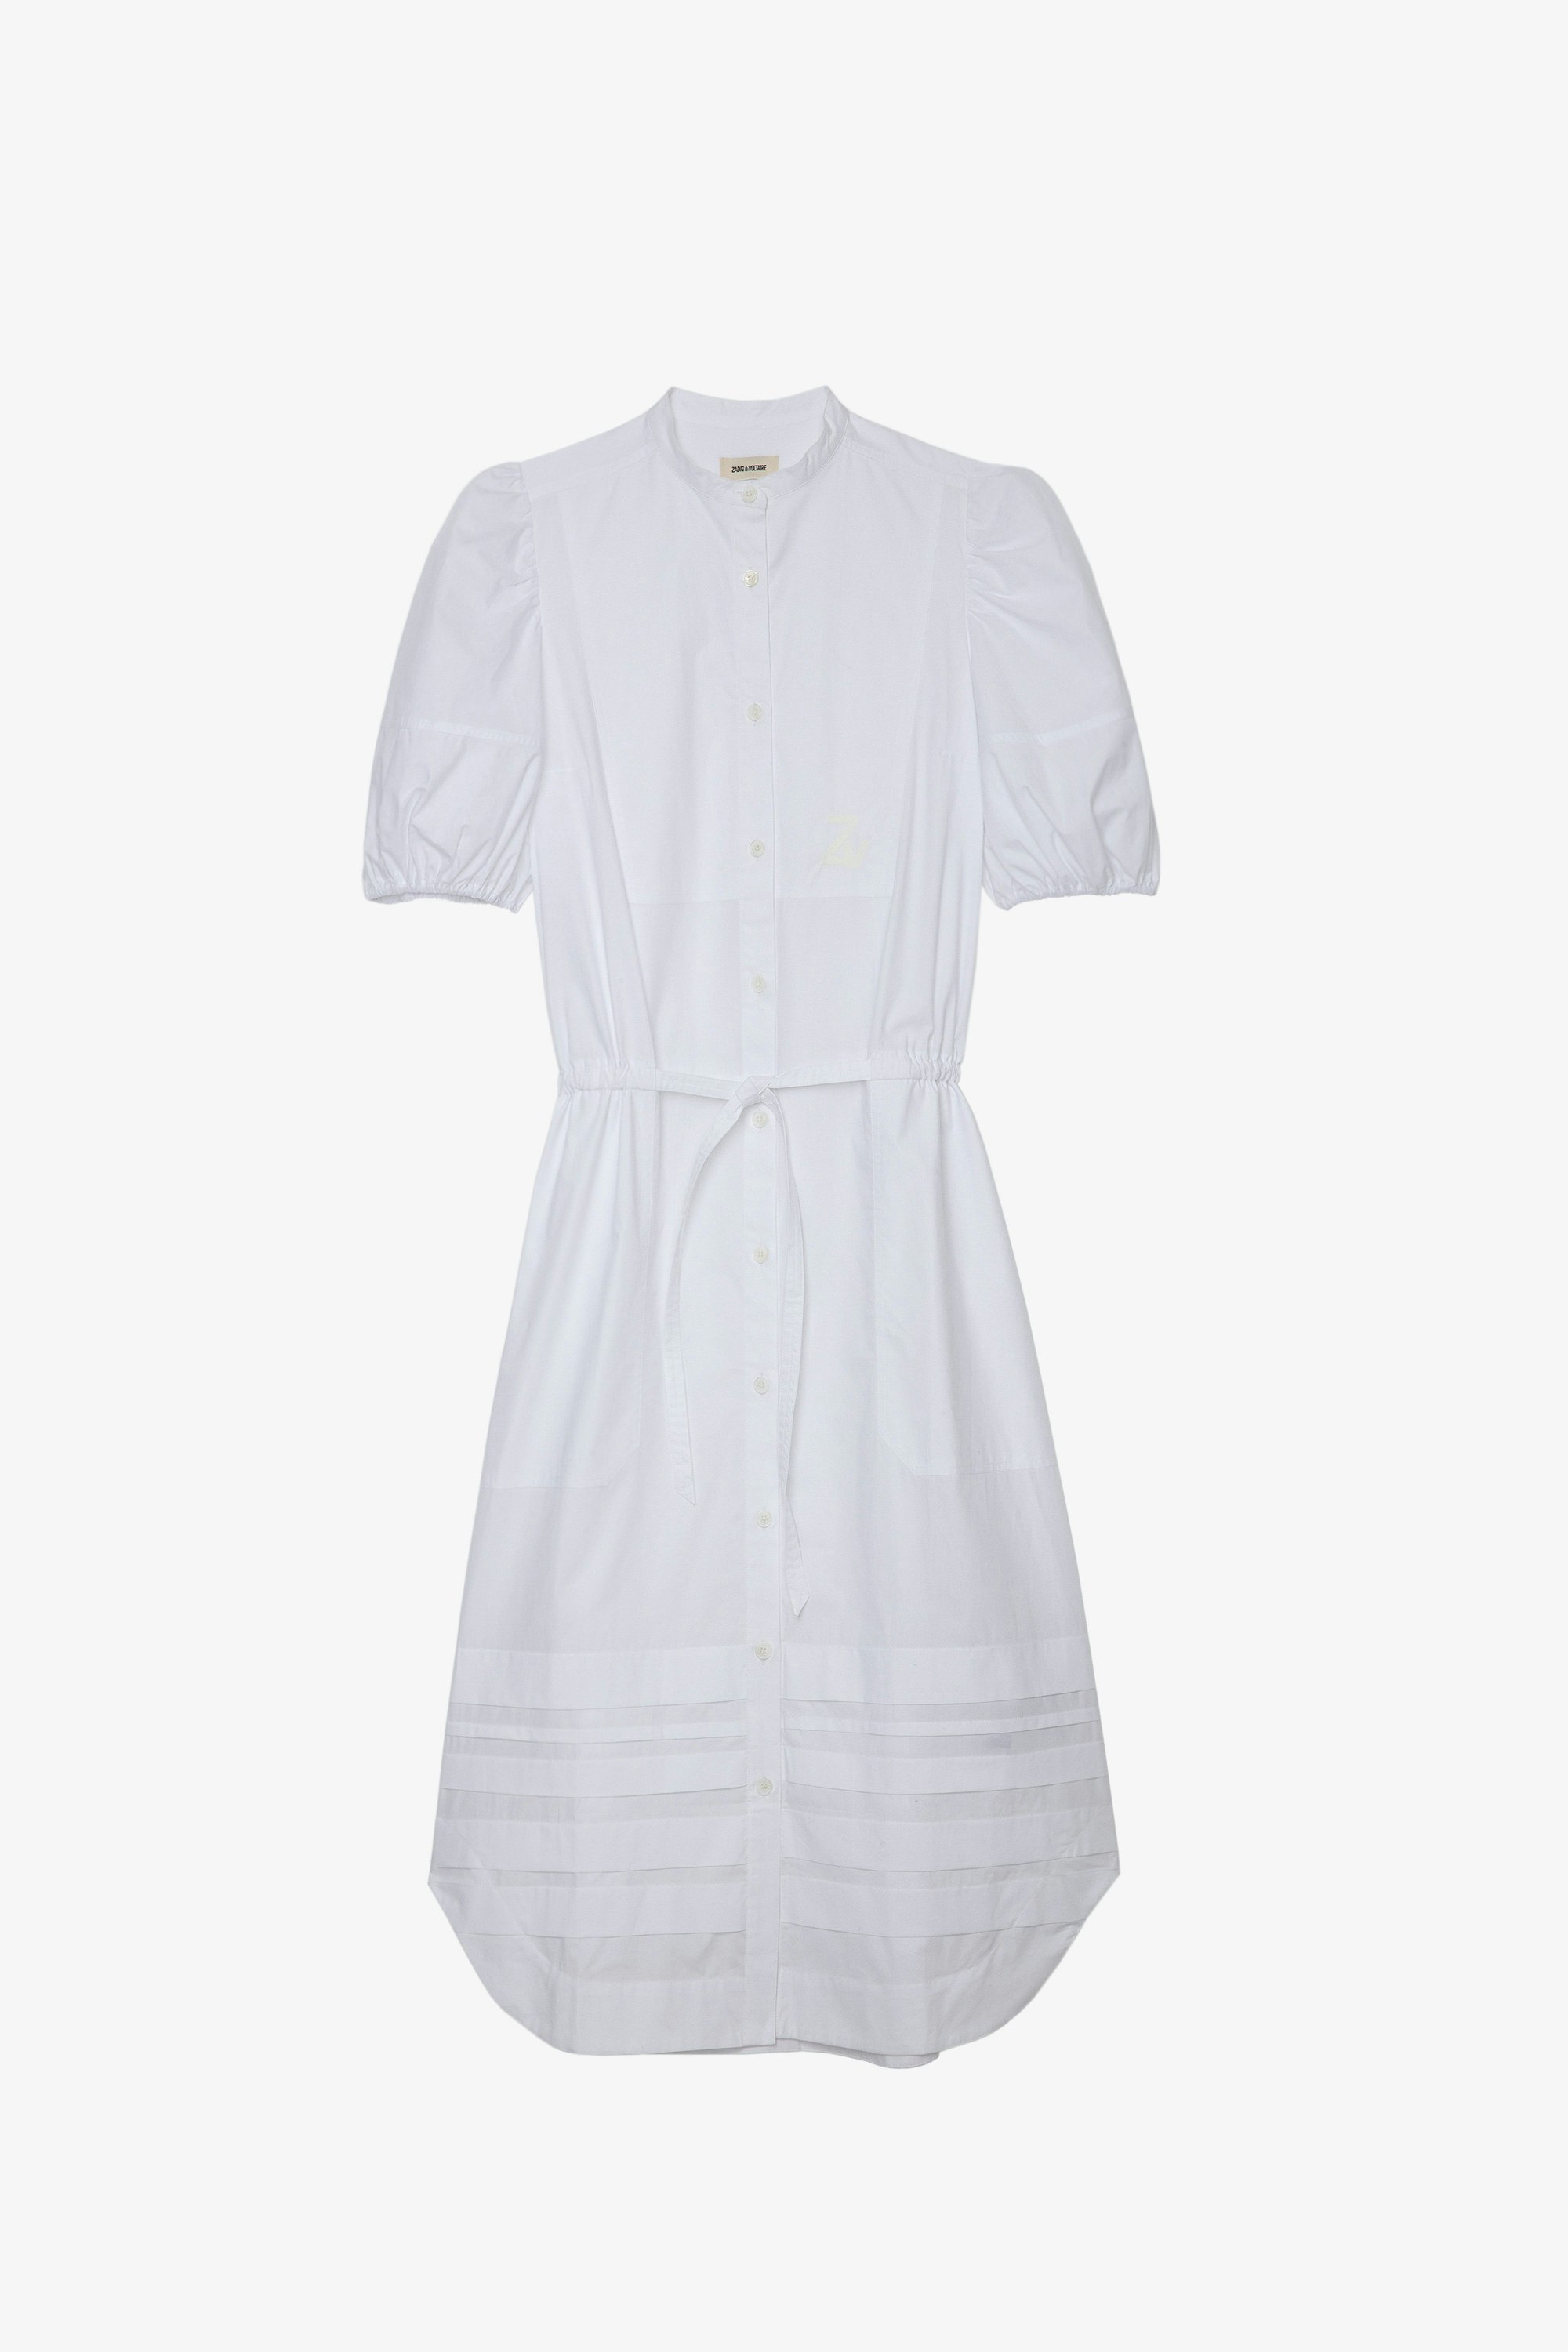 Ryana Pop ドレス Women’s white cotton mid-length dress 